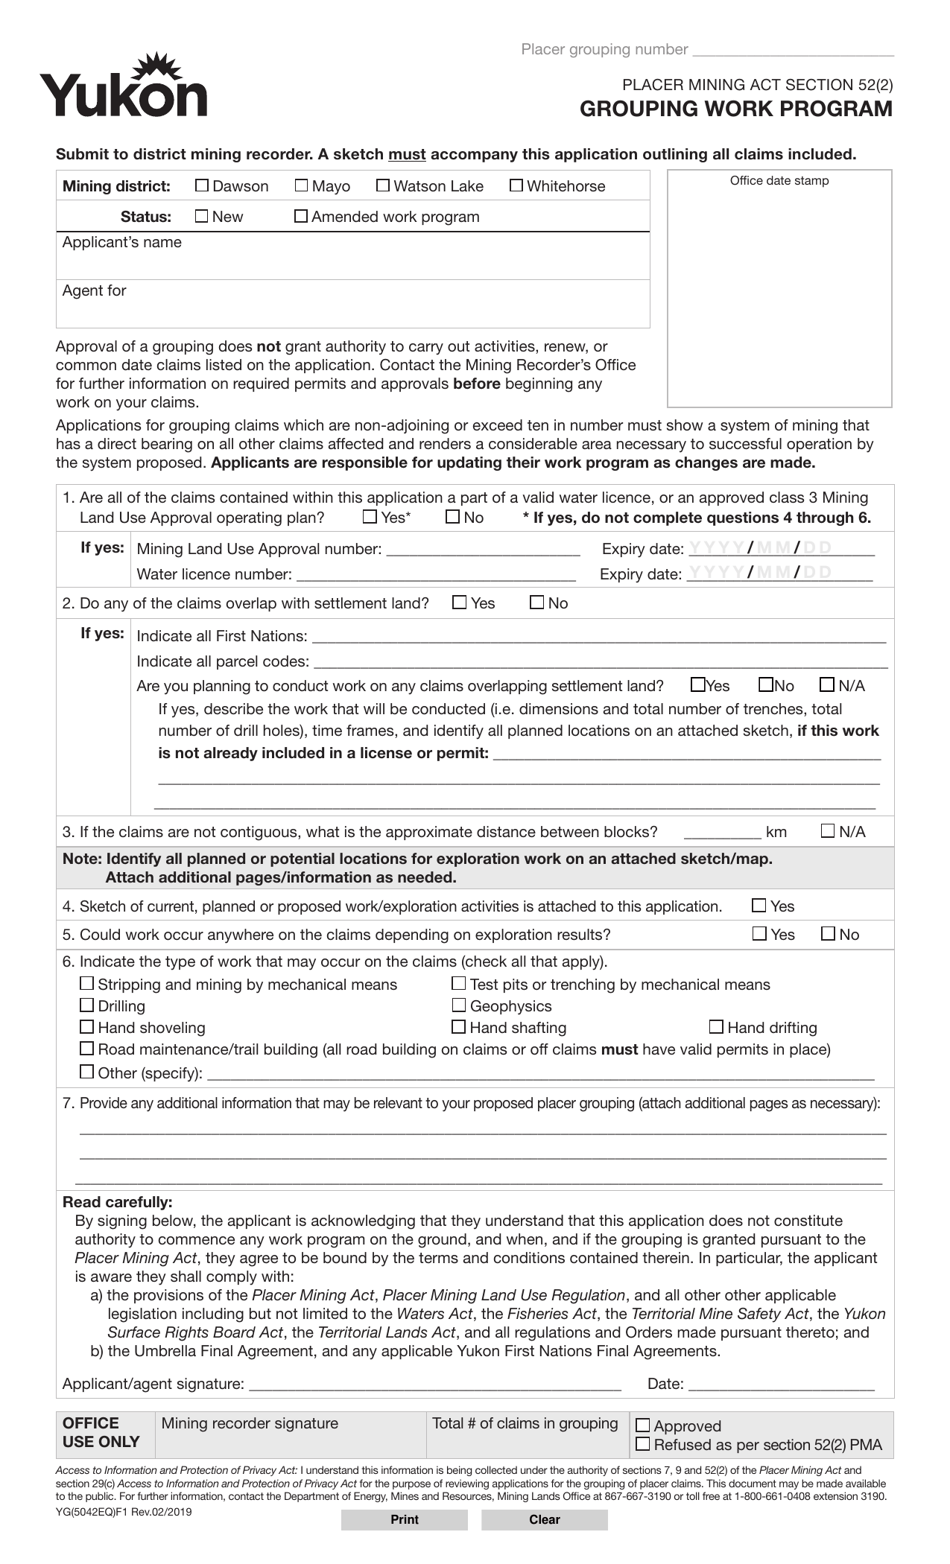 Form YG5042 Grouping Work Program - Yukon, Canada, Page 1